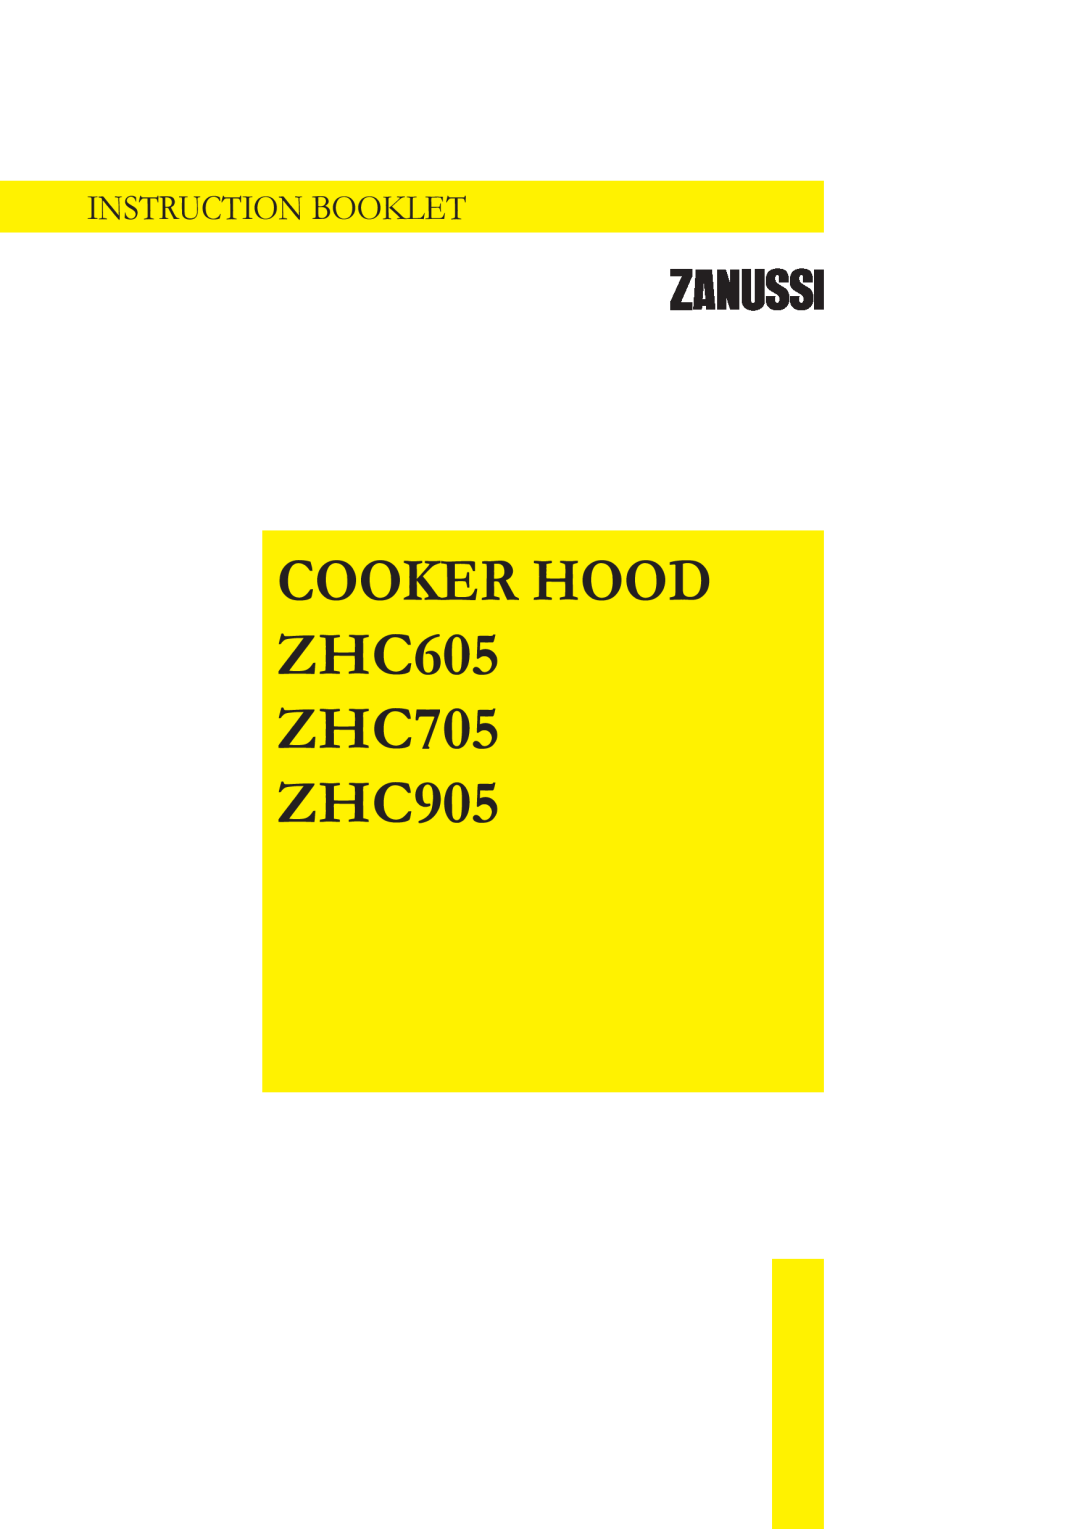 Zanussi manual COOKER HOOD ZHC605 ZHC705 ZHC905, Instruction Booklet 